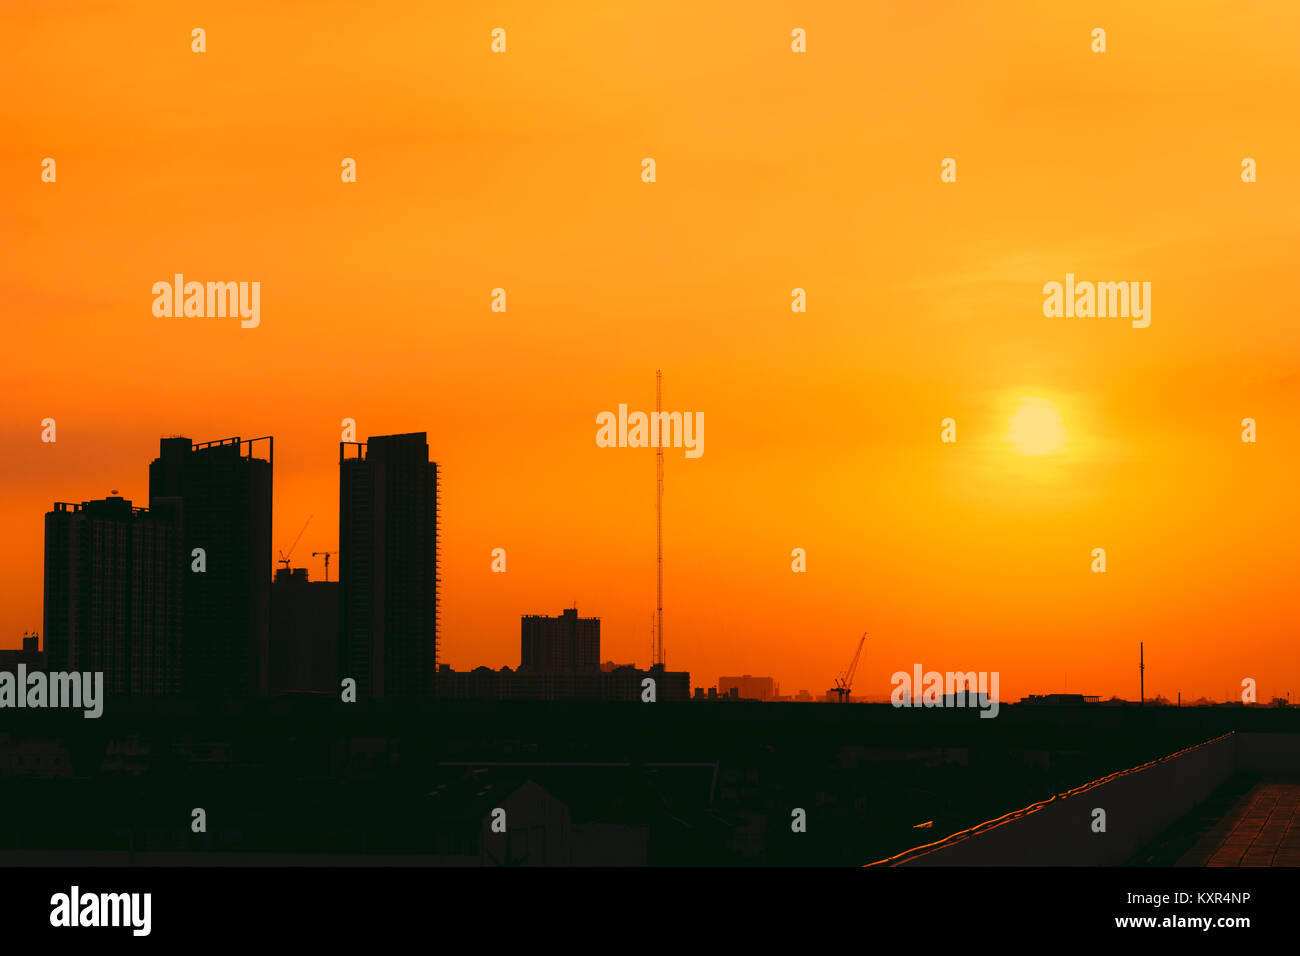 Stadt metro Silhouette am sonnigen orange Sonnenuntergang Himmel Stockfoto